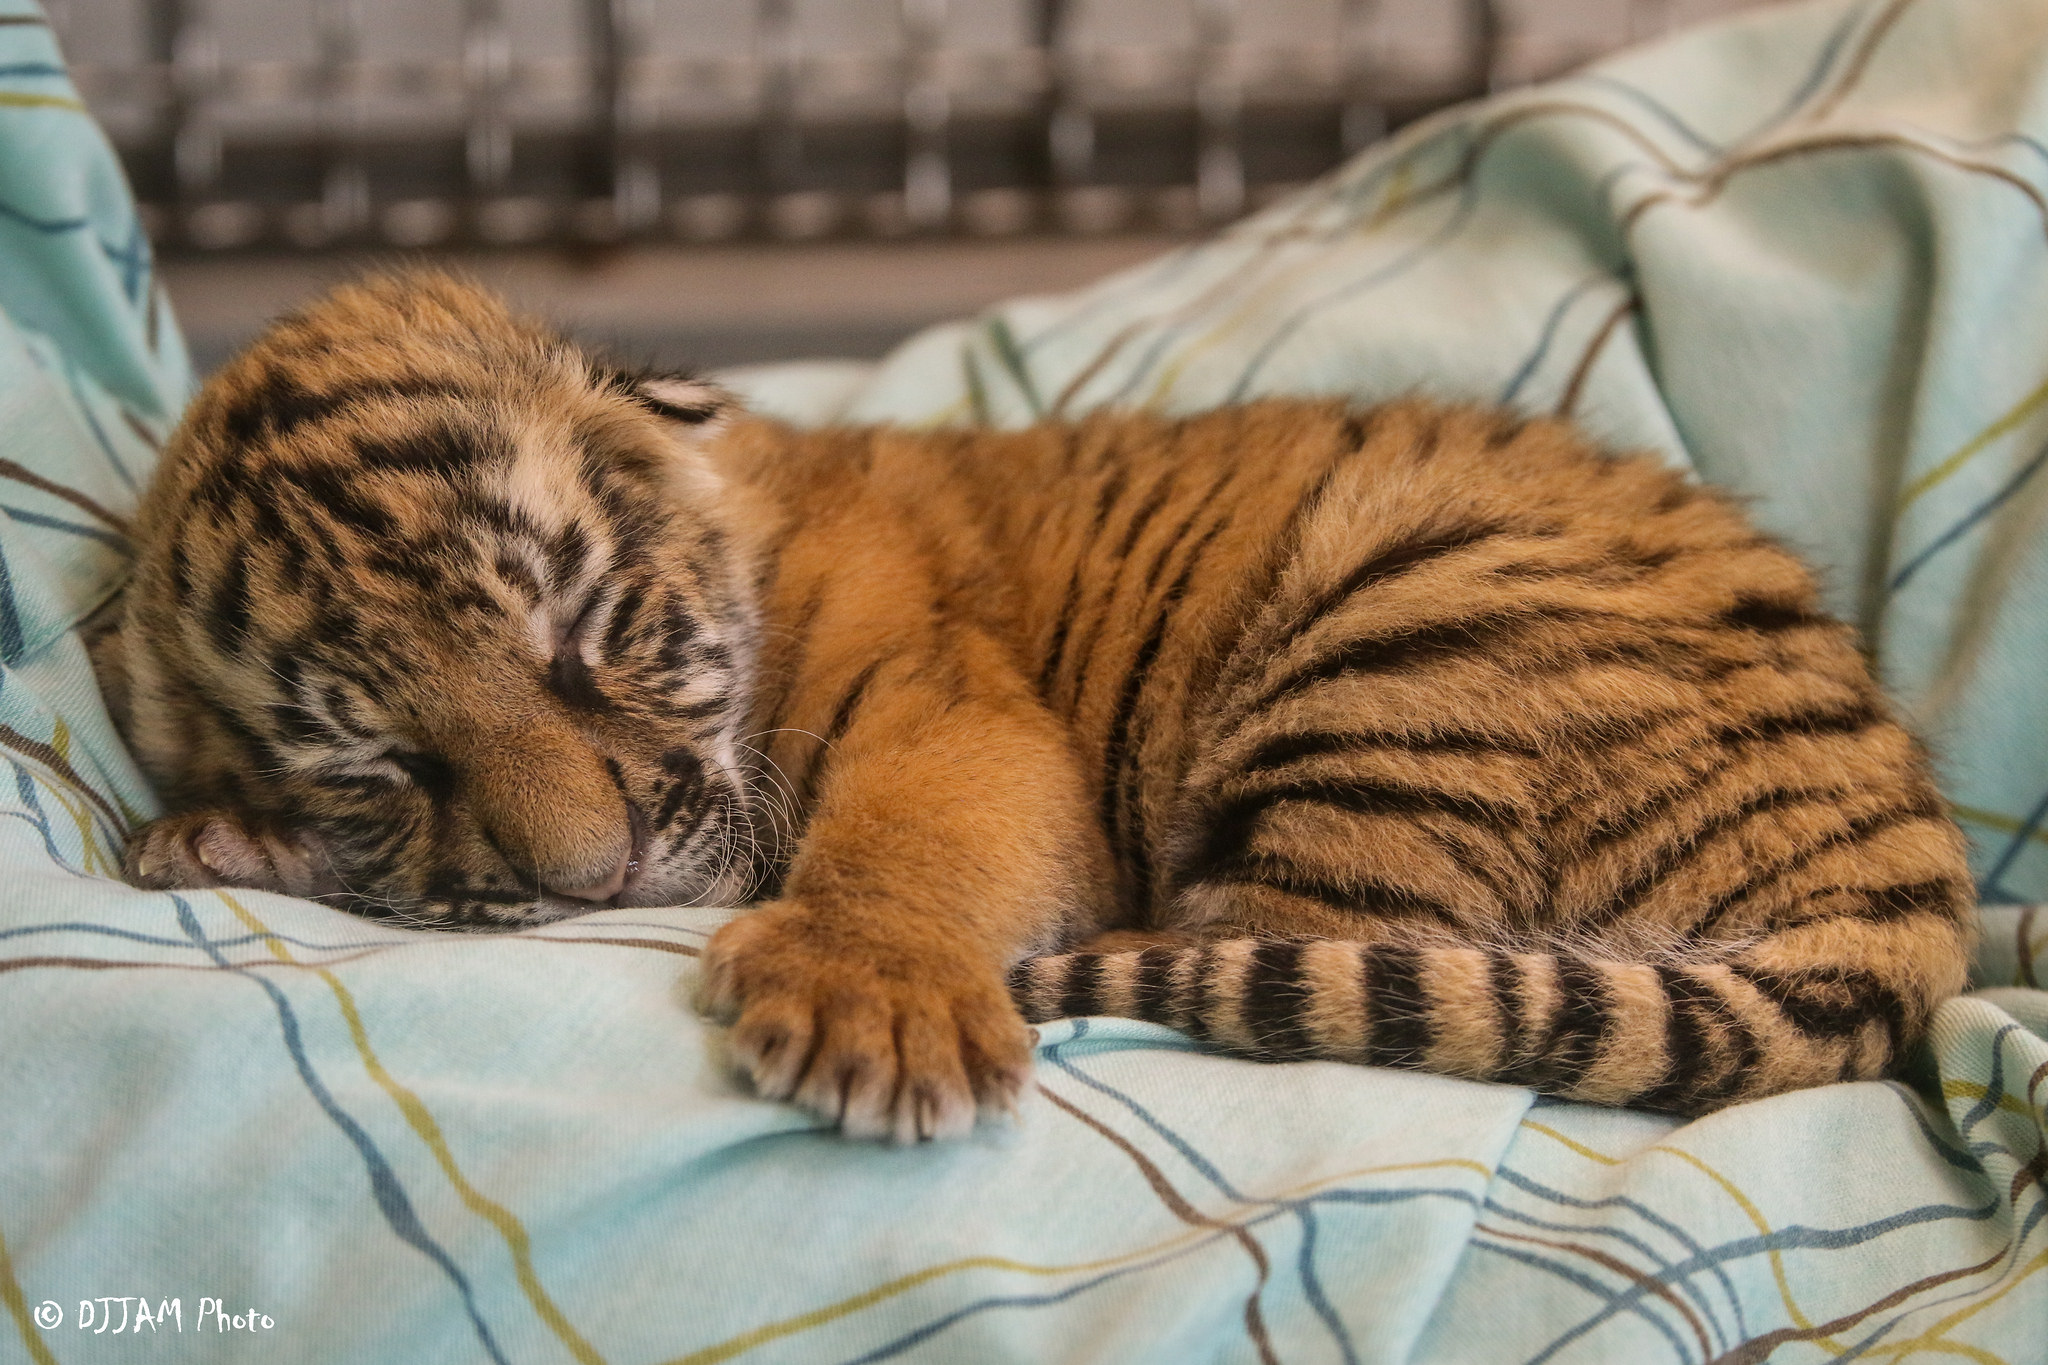 Bébé tigre de 5 jours endormi